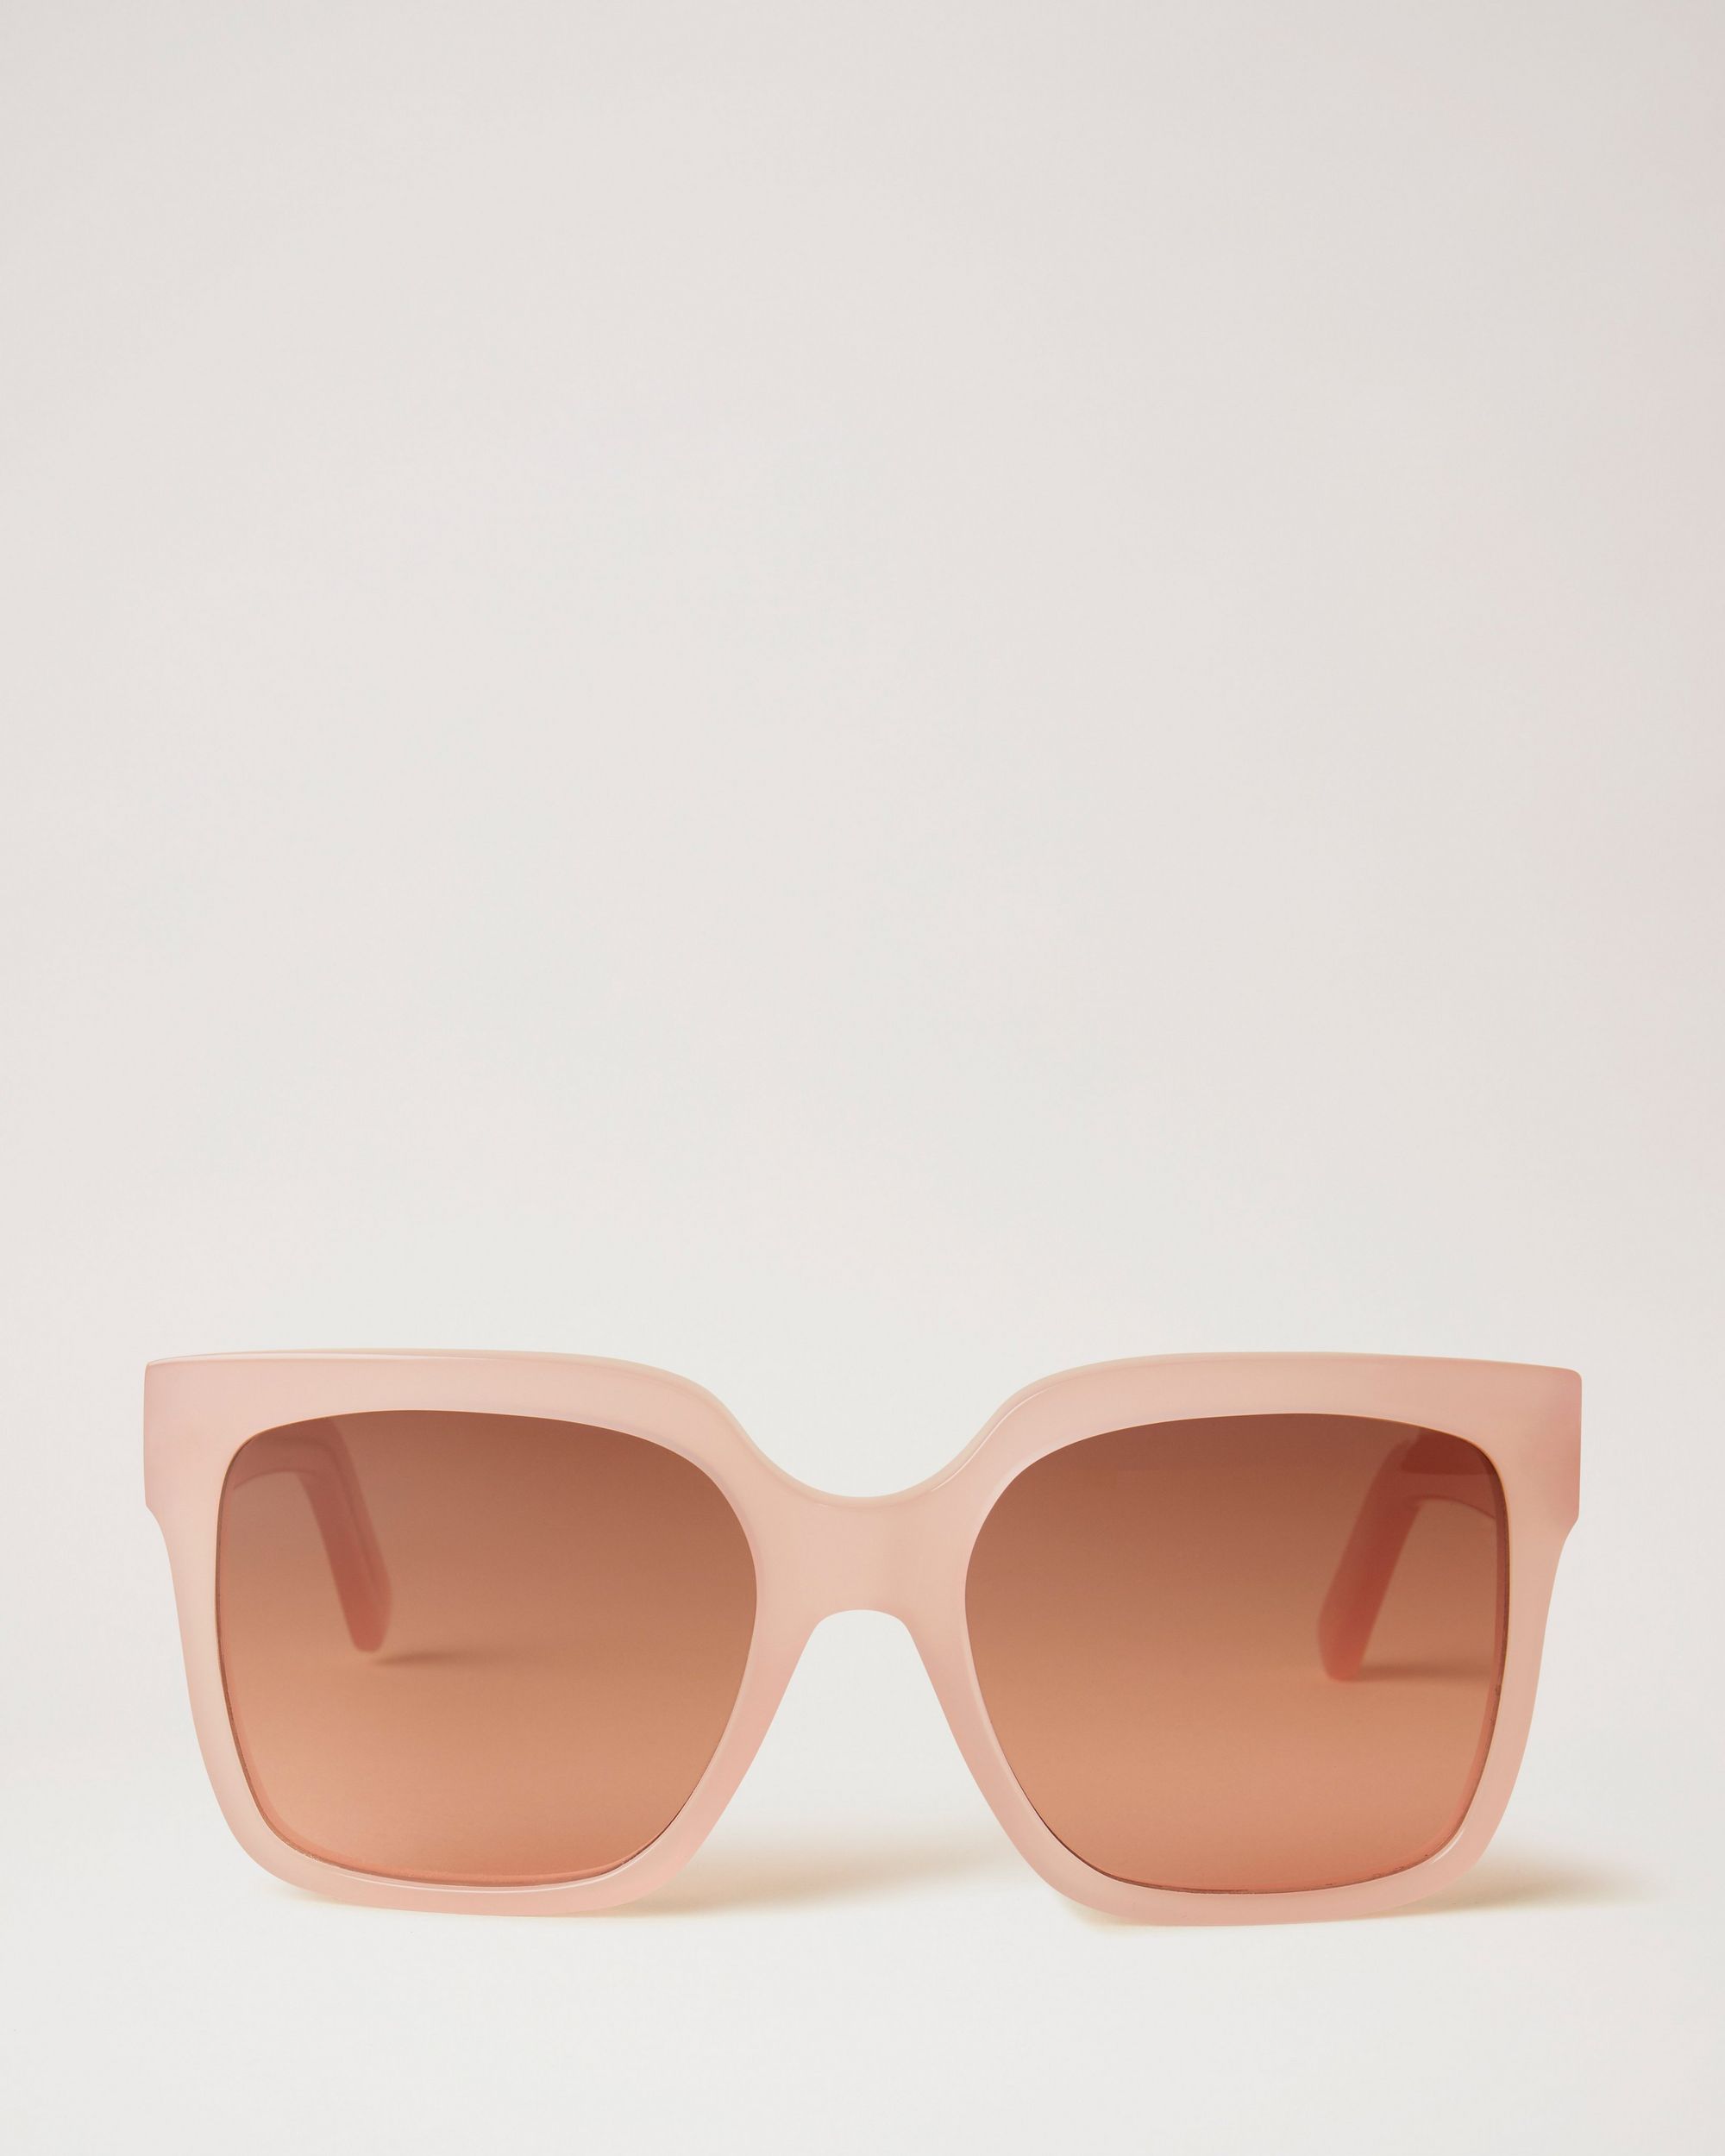 Cute pink designer sunglasses